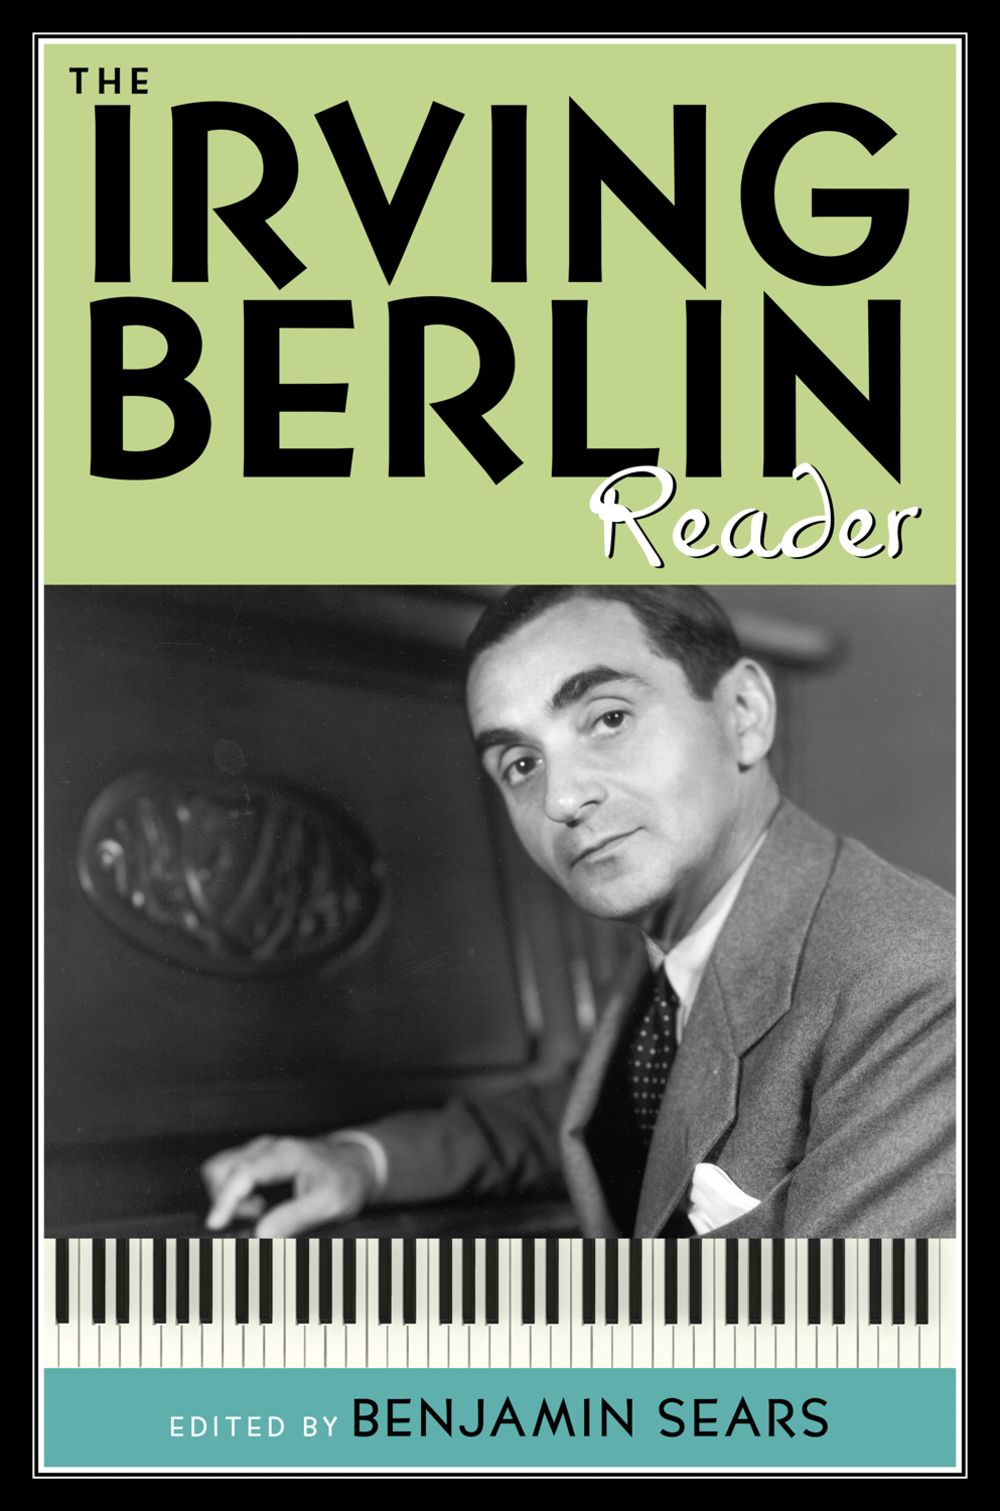 Irving Berlin Reader Ed. Sears Hardback Sheet Music Songbook